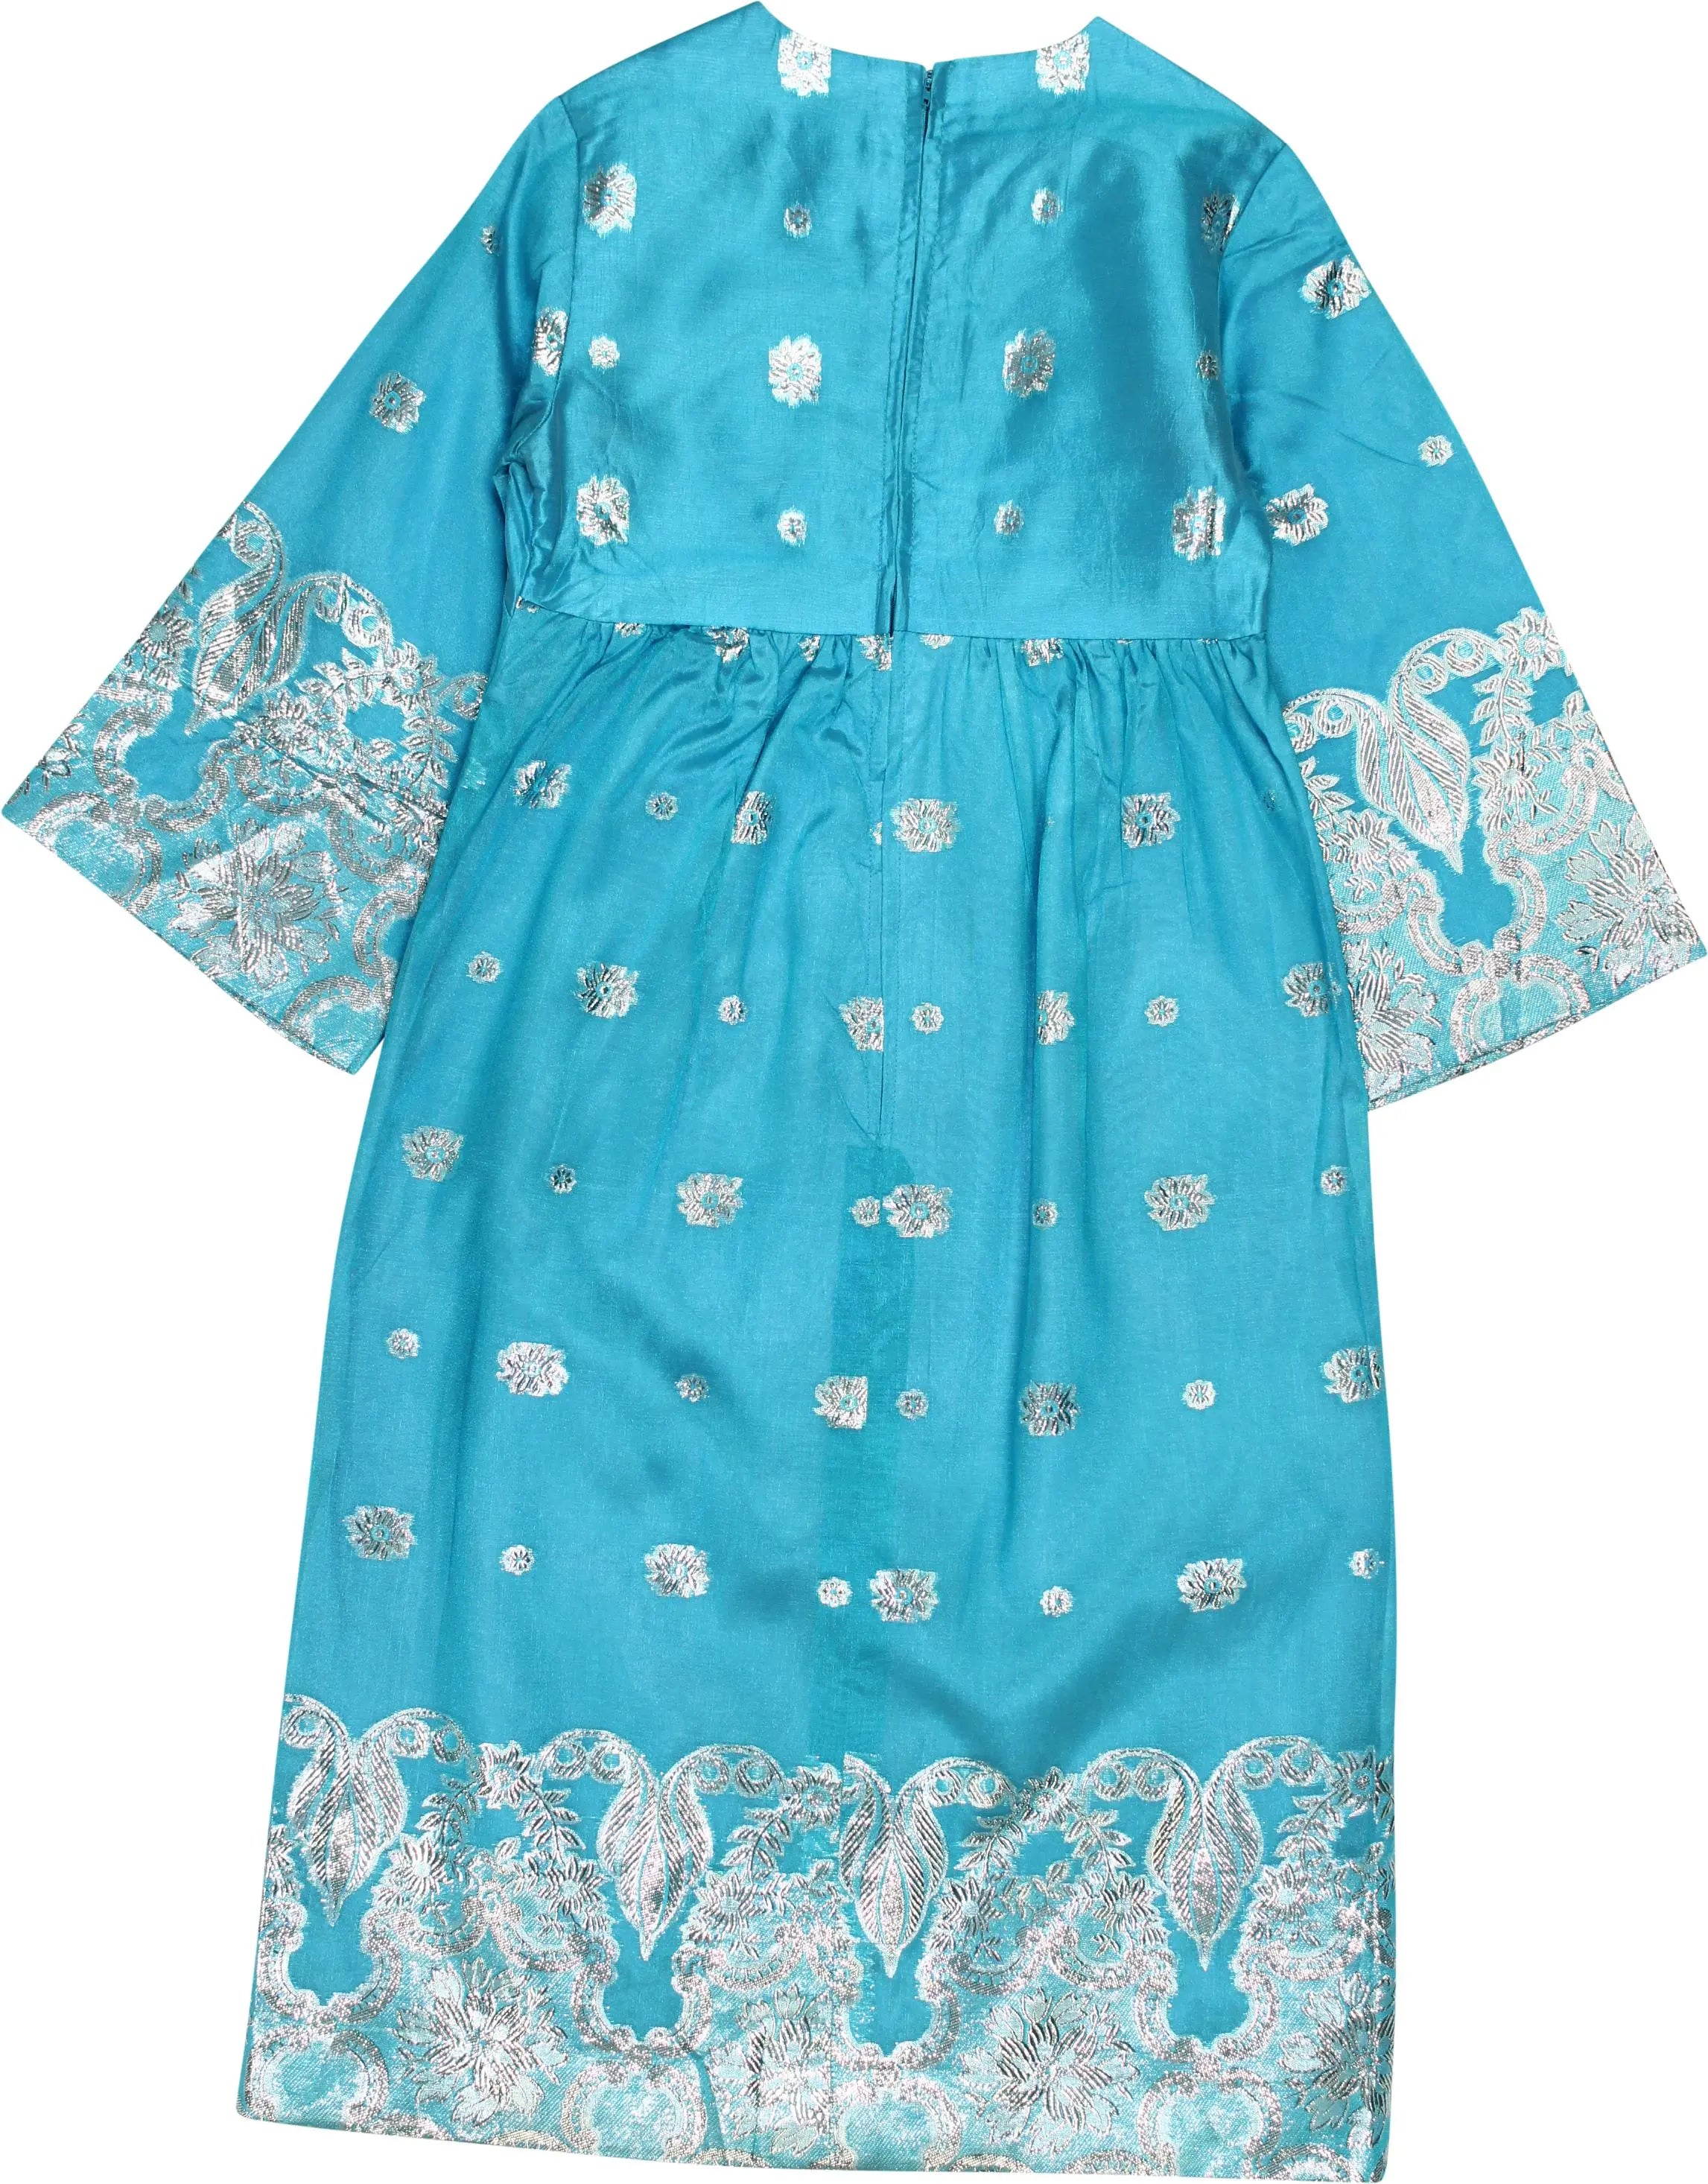 Sadame Originals - 60s Dress- ThriftTale.com - Vintage and second handclothing